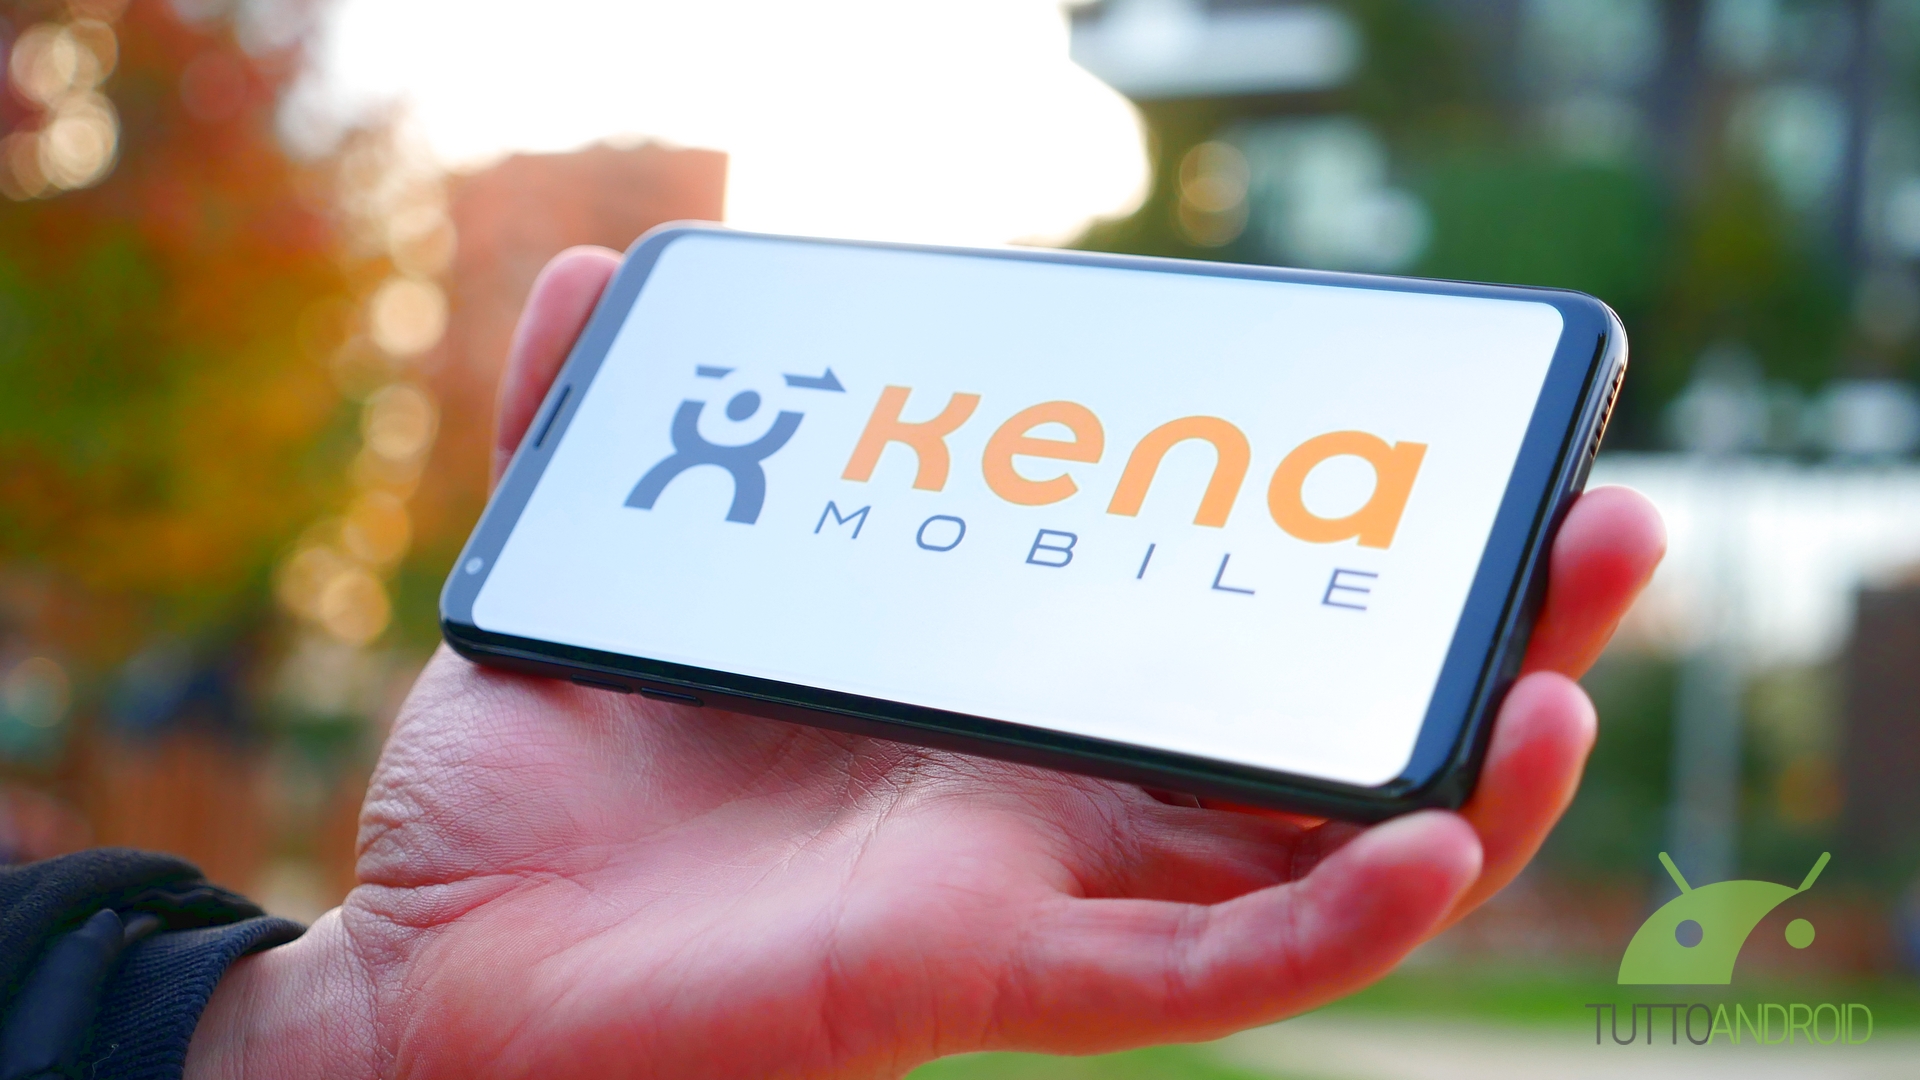 Promo Kena mobile: 130 Giga a 7.99 euro mese